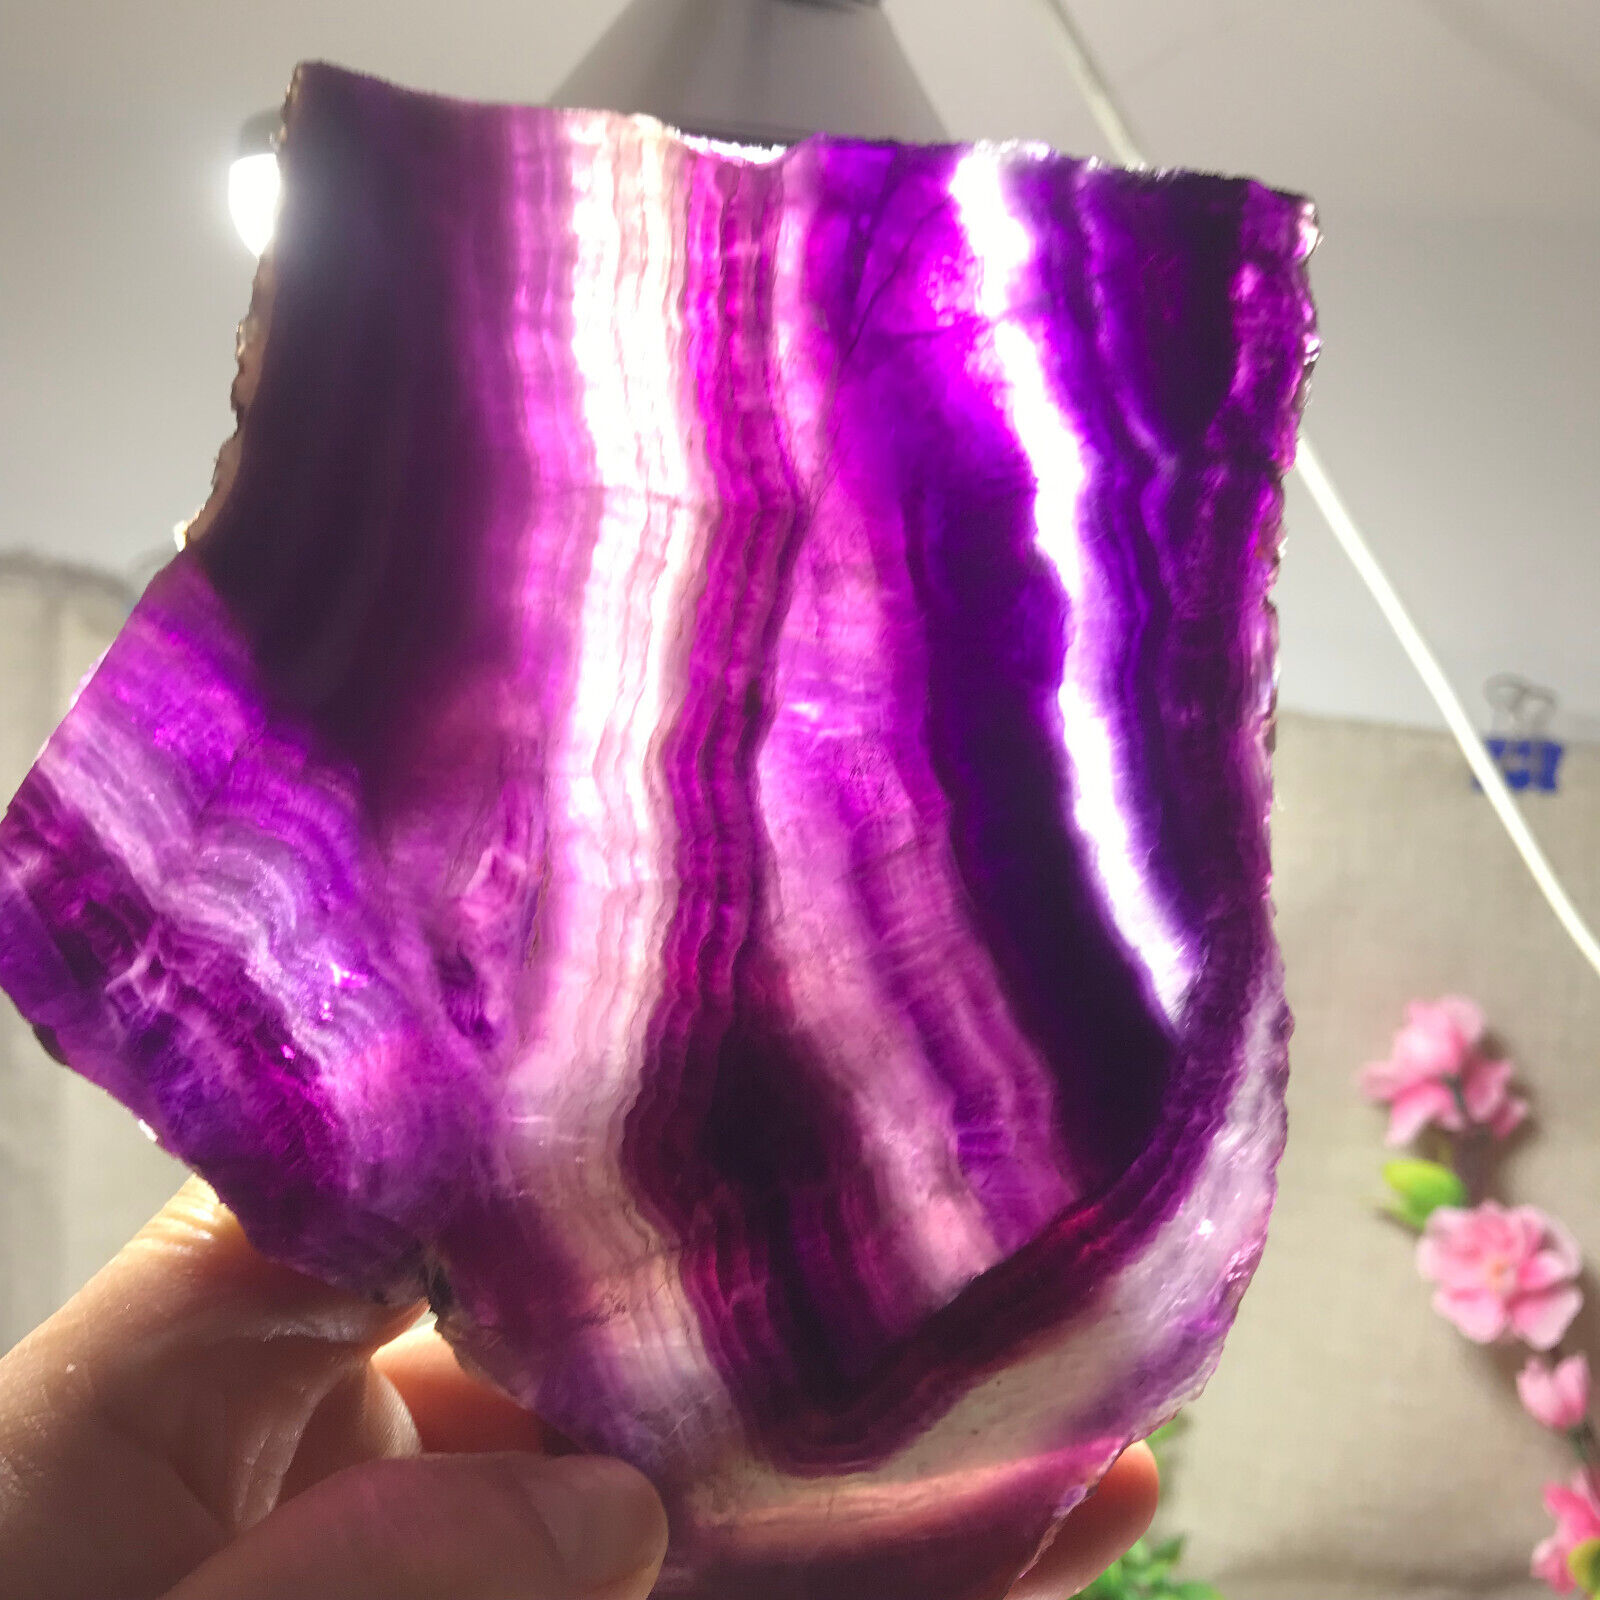 407g Stunning-Natural-Colorful-Slice-Fluorite-Crystal-Stone-purple-Fluorite 01